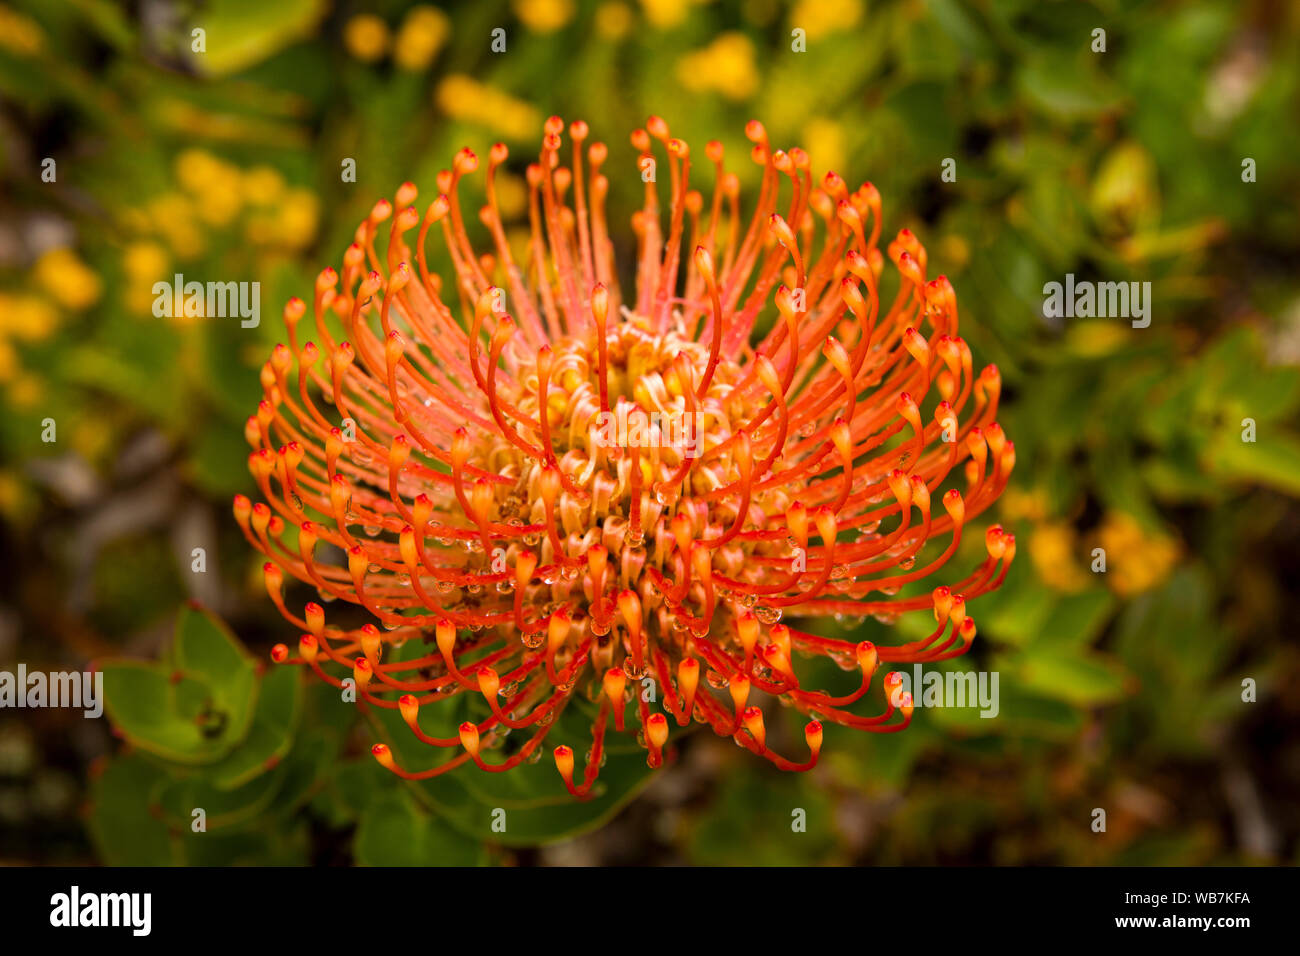 UK, England, Scilly Islands, Tresco, Abbey Gardens, globe-shaped, orange flower heads of  Leucospernum patersonii, native plant of South Africa Stock Photo